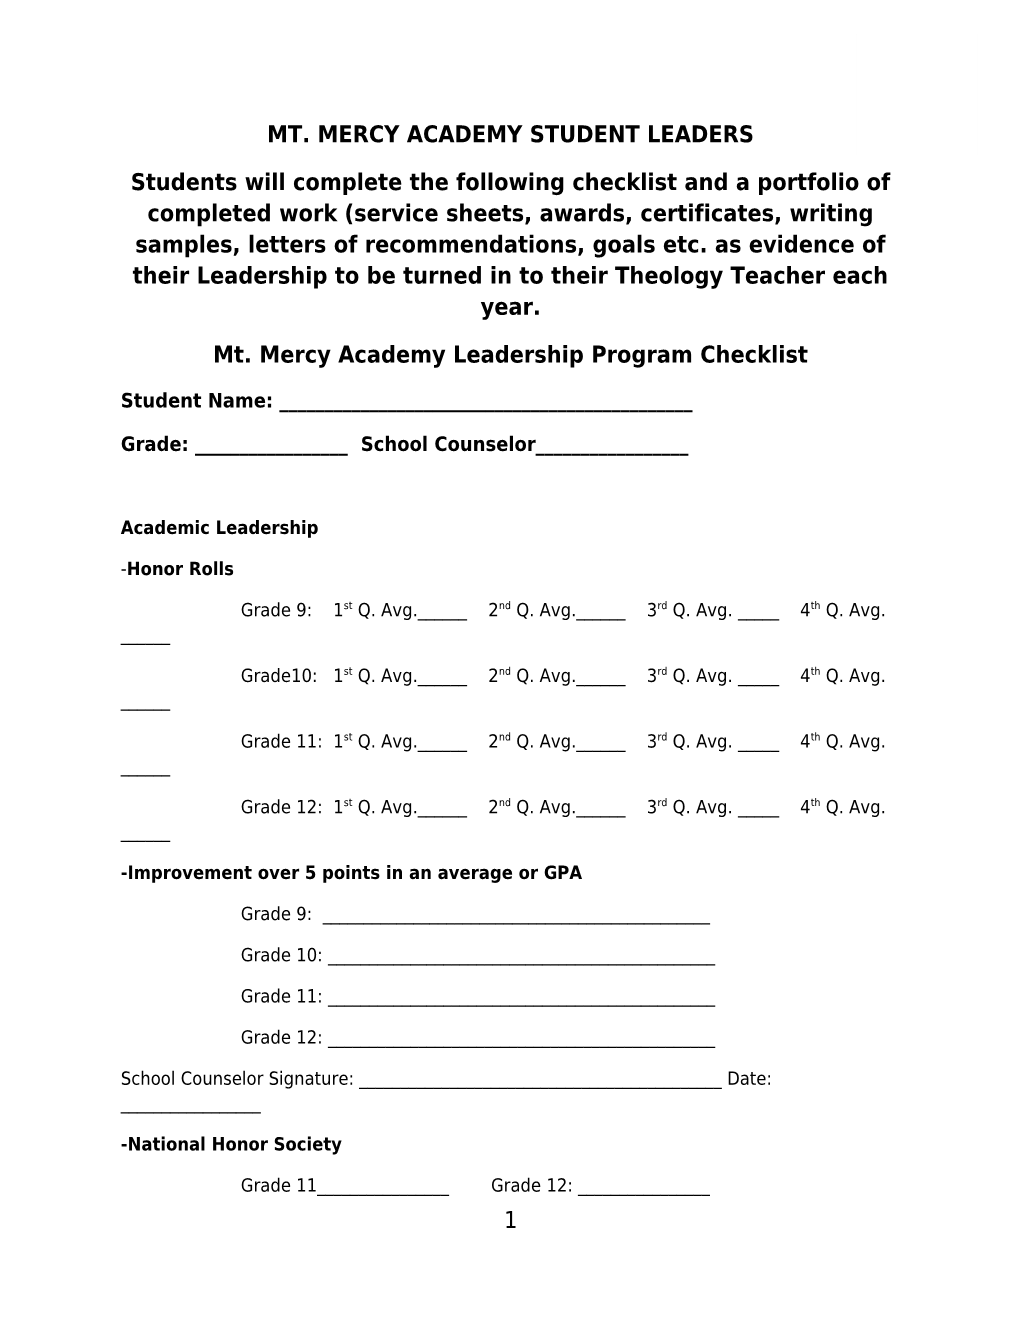 Mt. Mercy Academy Leadership Program Checklist